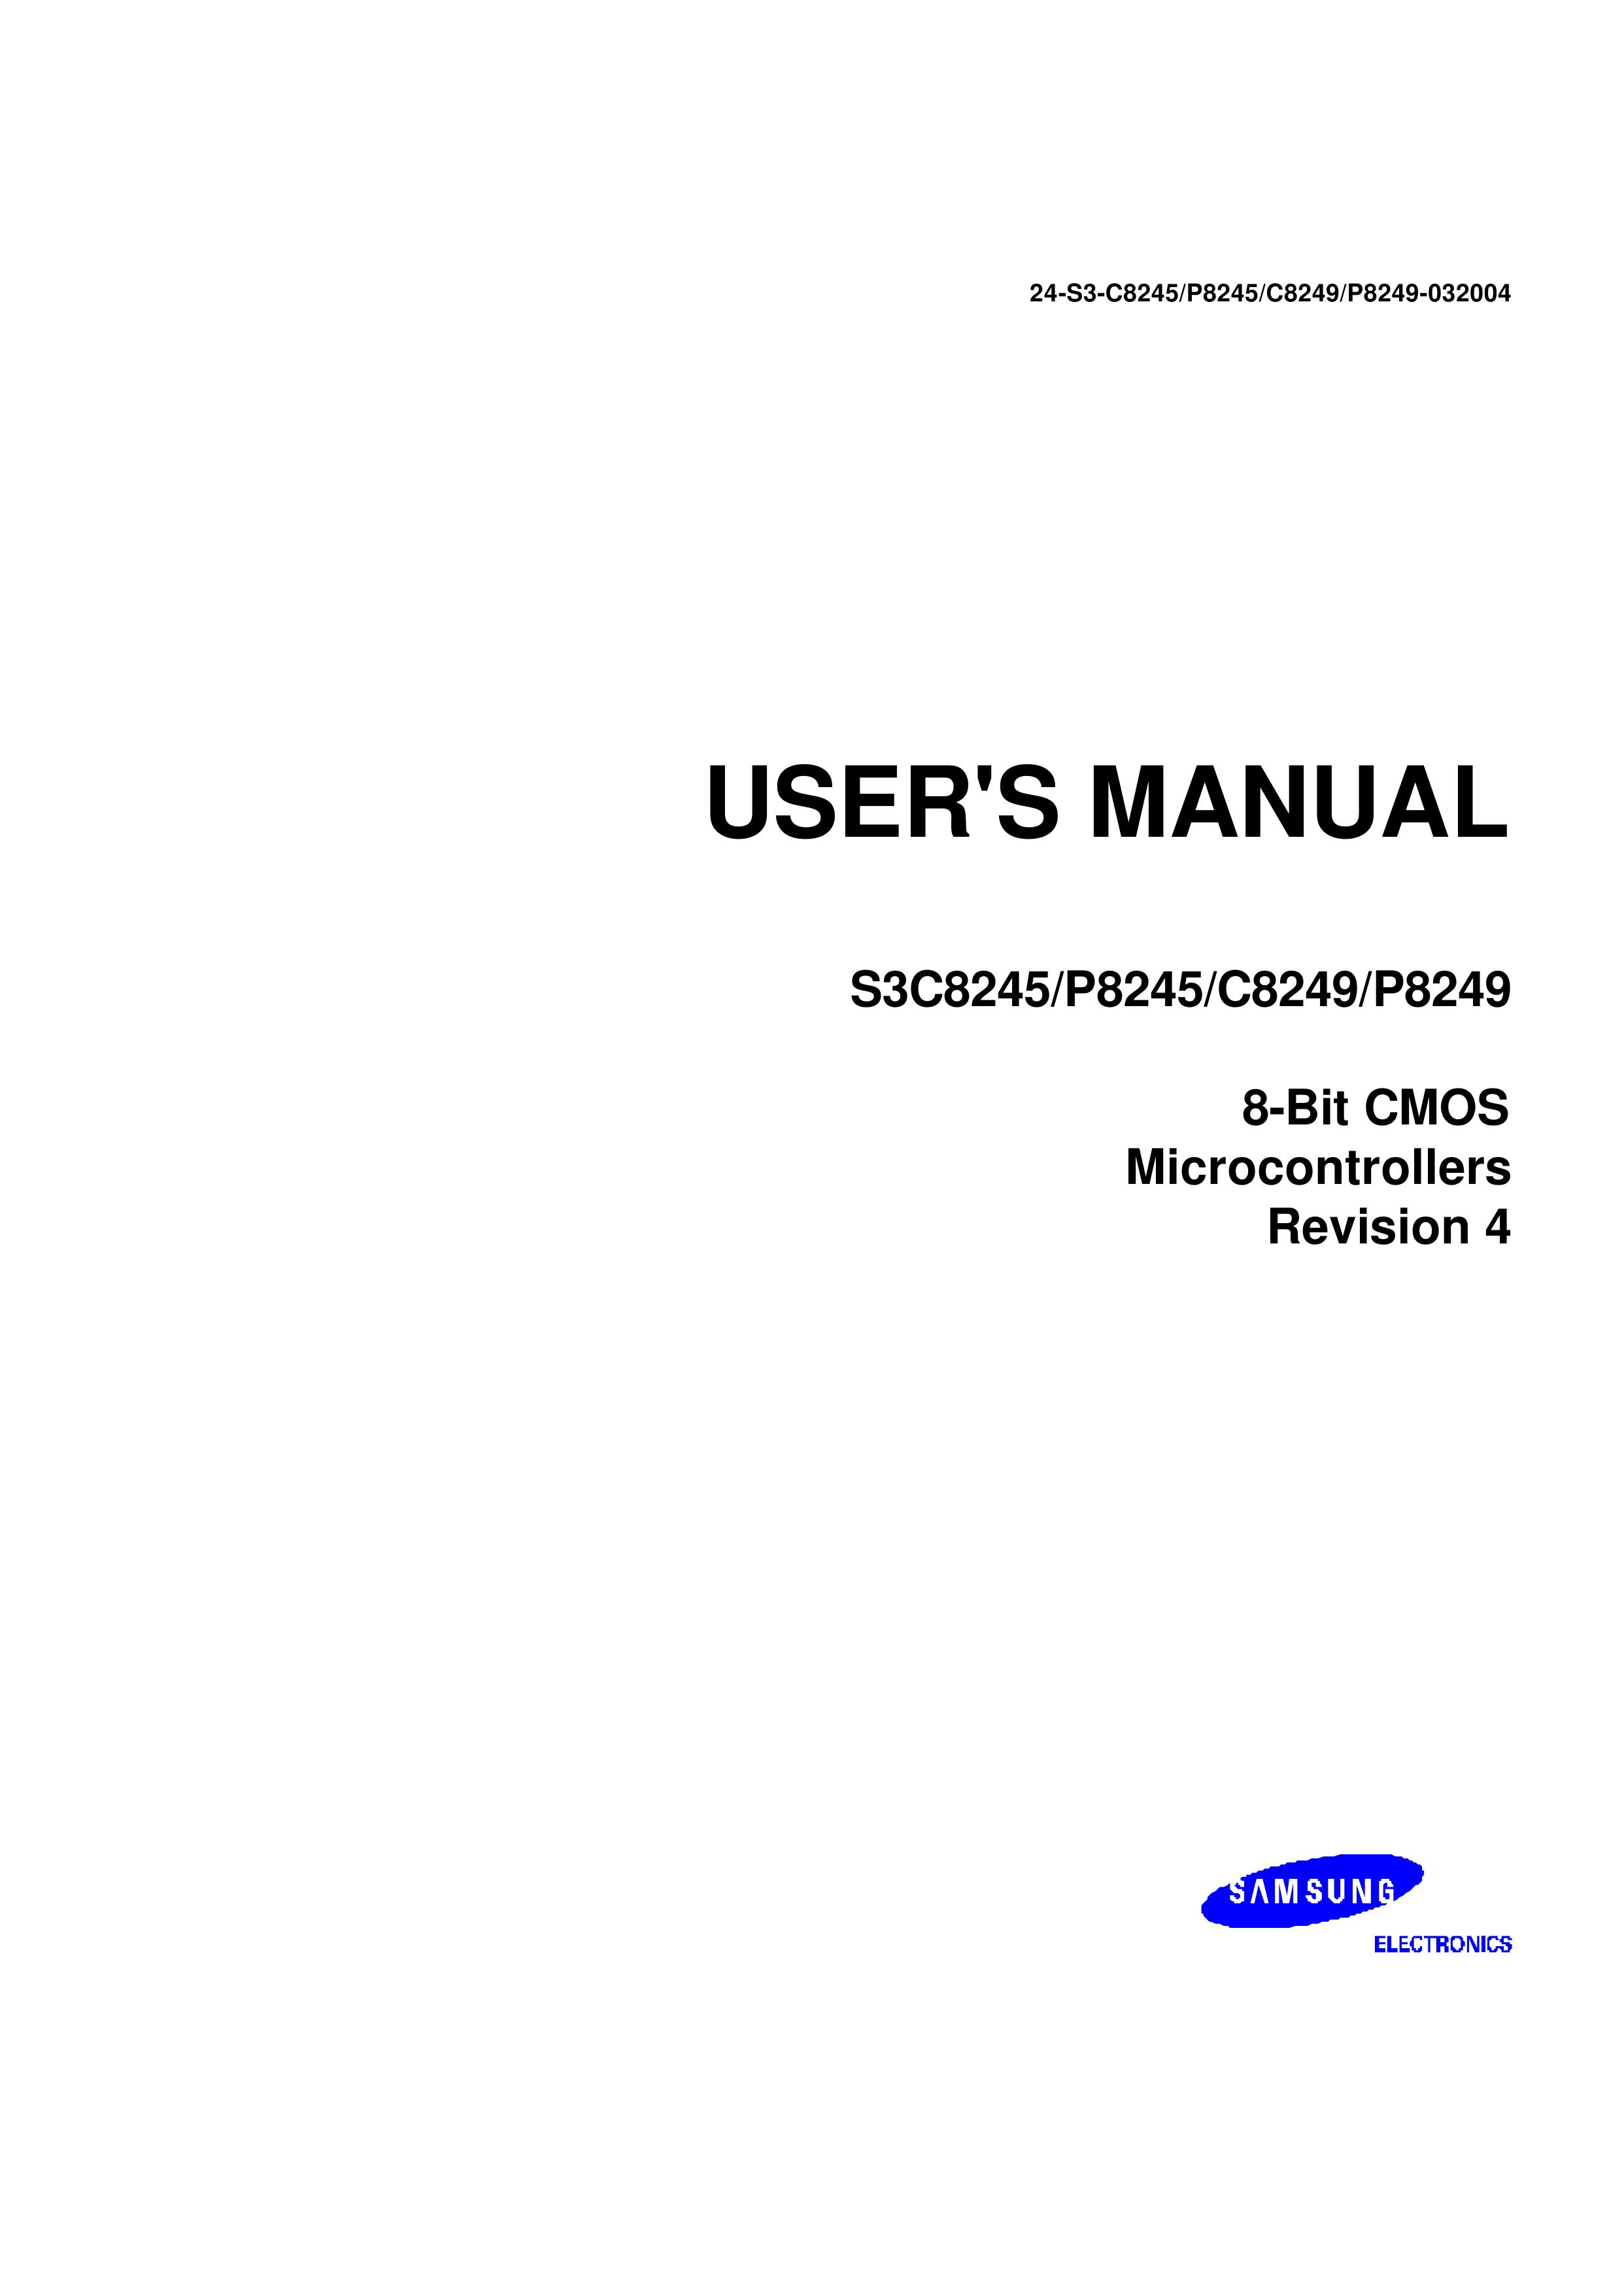 Samsung C8249 Microscope & Magnifier User Manual